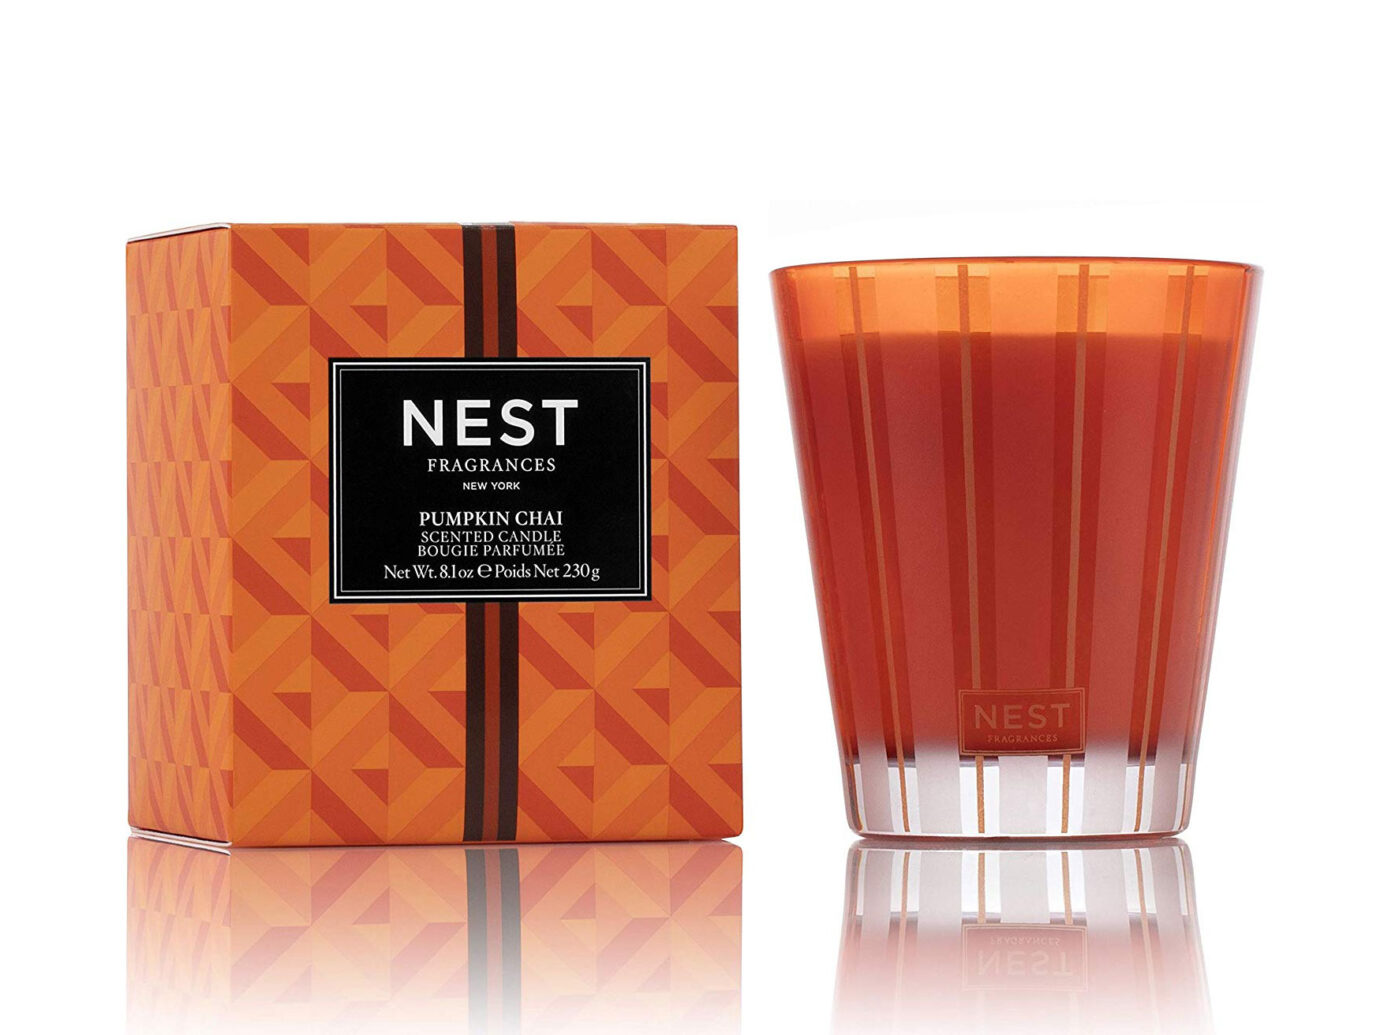 NEST Fragrances Classic Candle in Pumpkin Chai